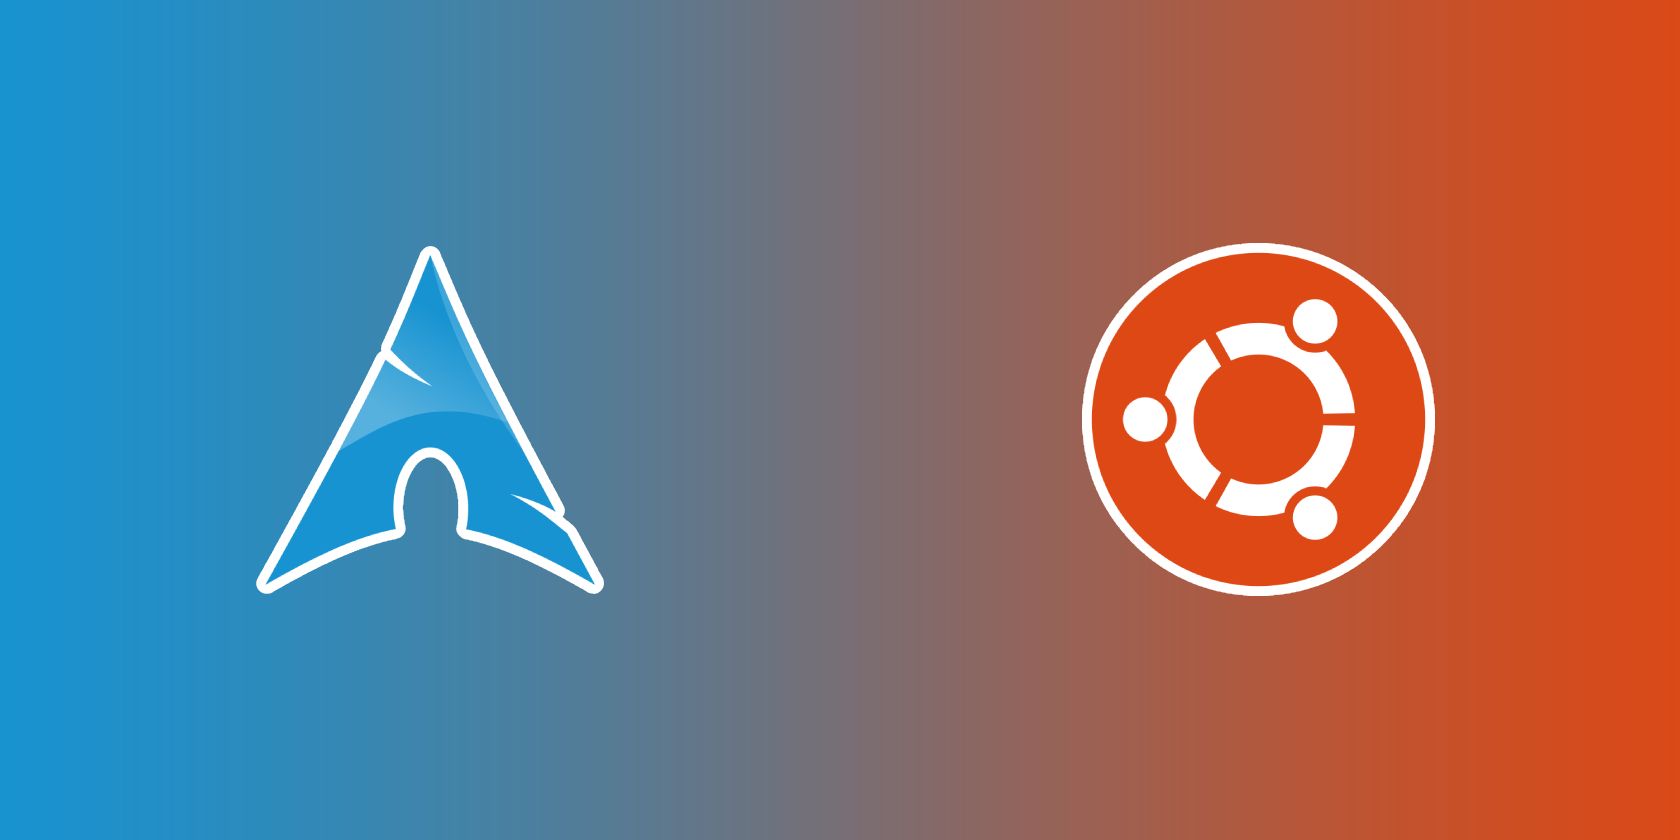 Ubuntu vs. Arch Linux: Which Linux Distro Should You Choose?